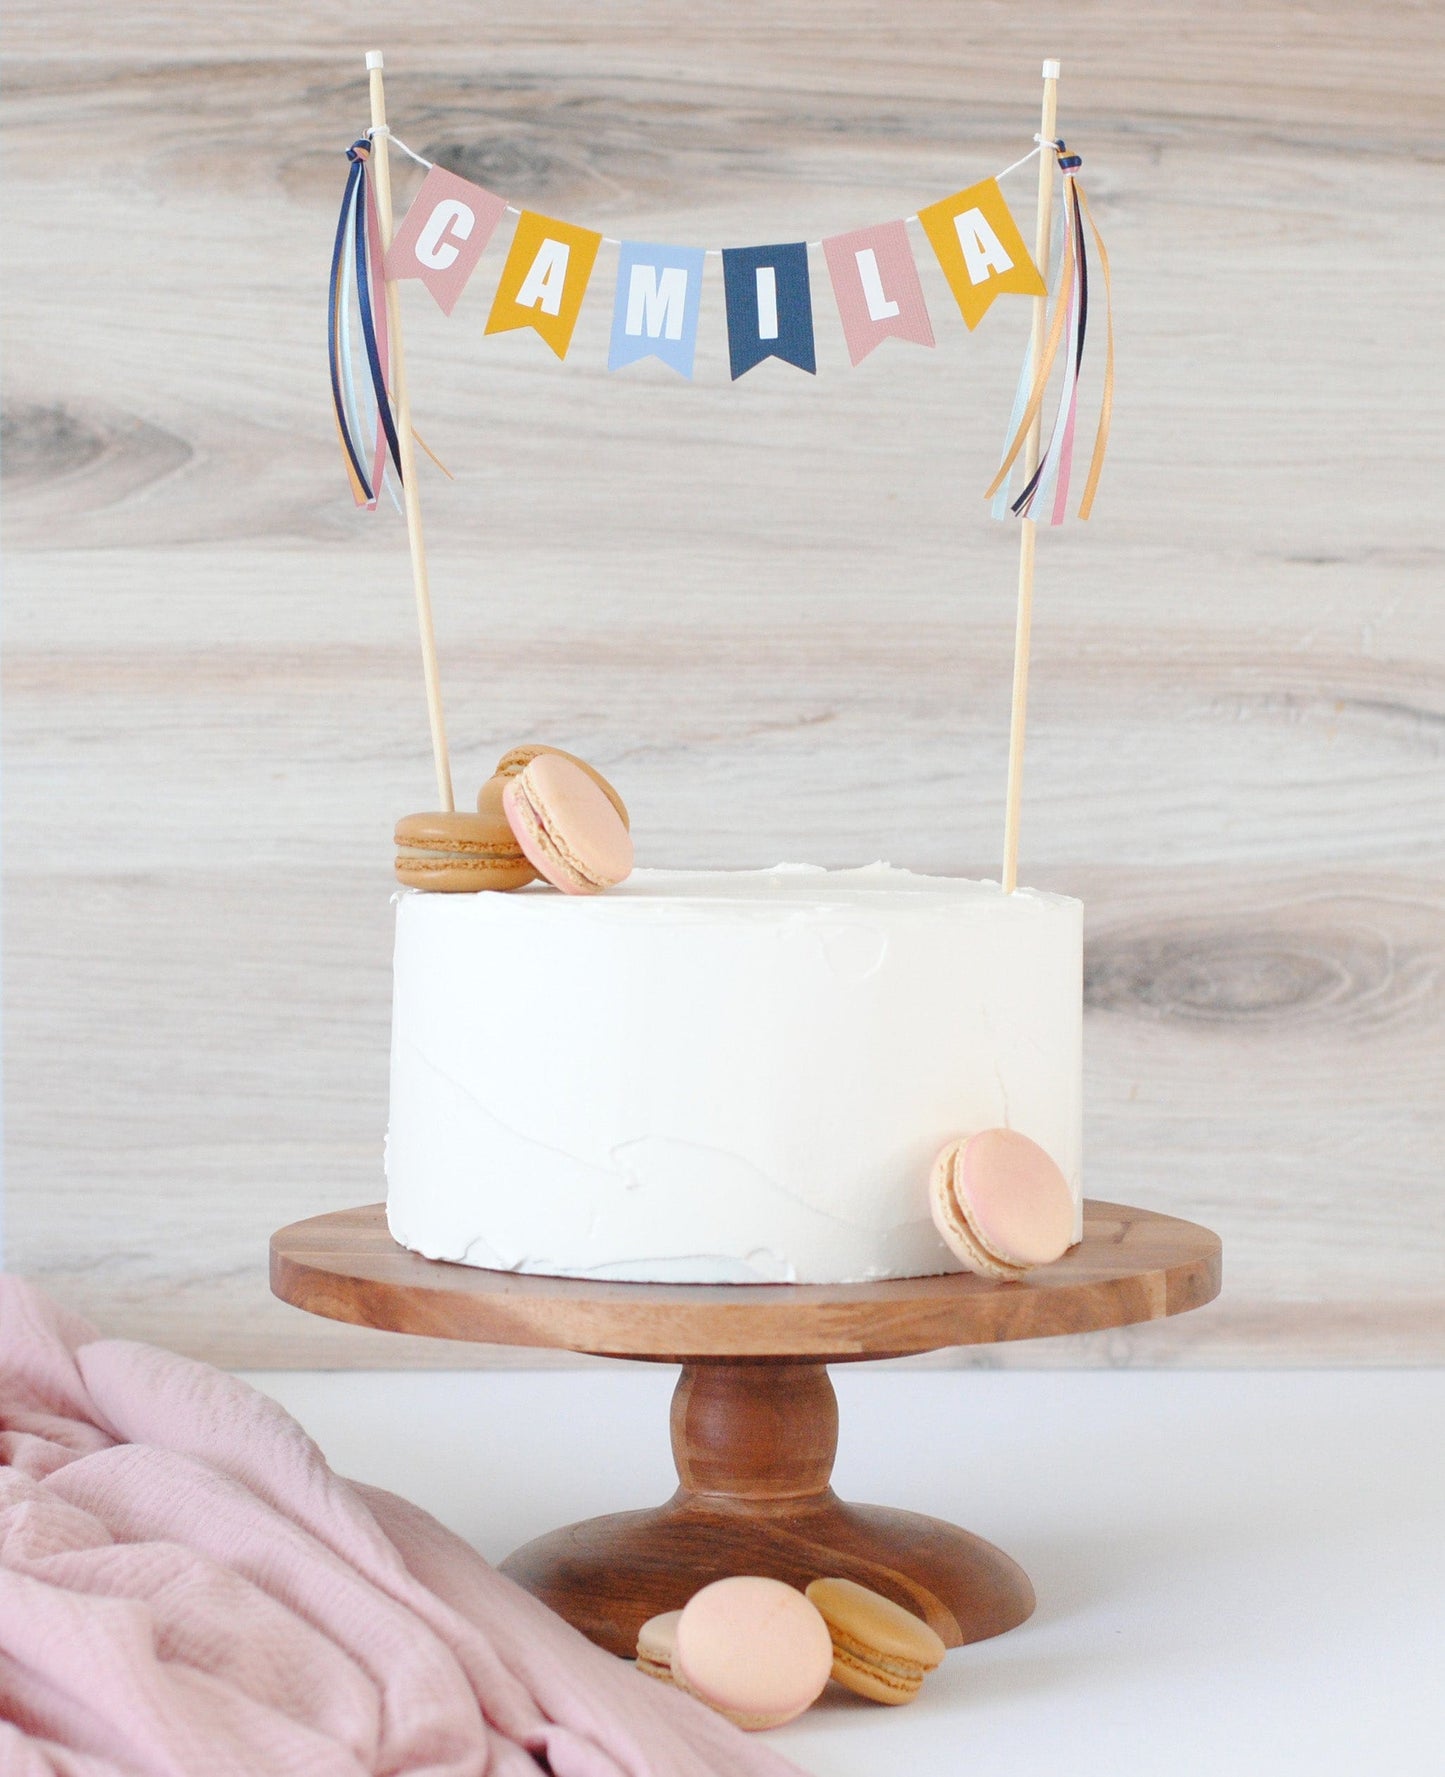 HAPPY BIRTHDAY Cake Topper (Pastel Rainbow) – Avalon Sunshine